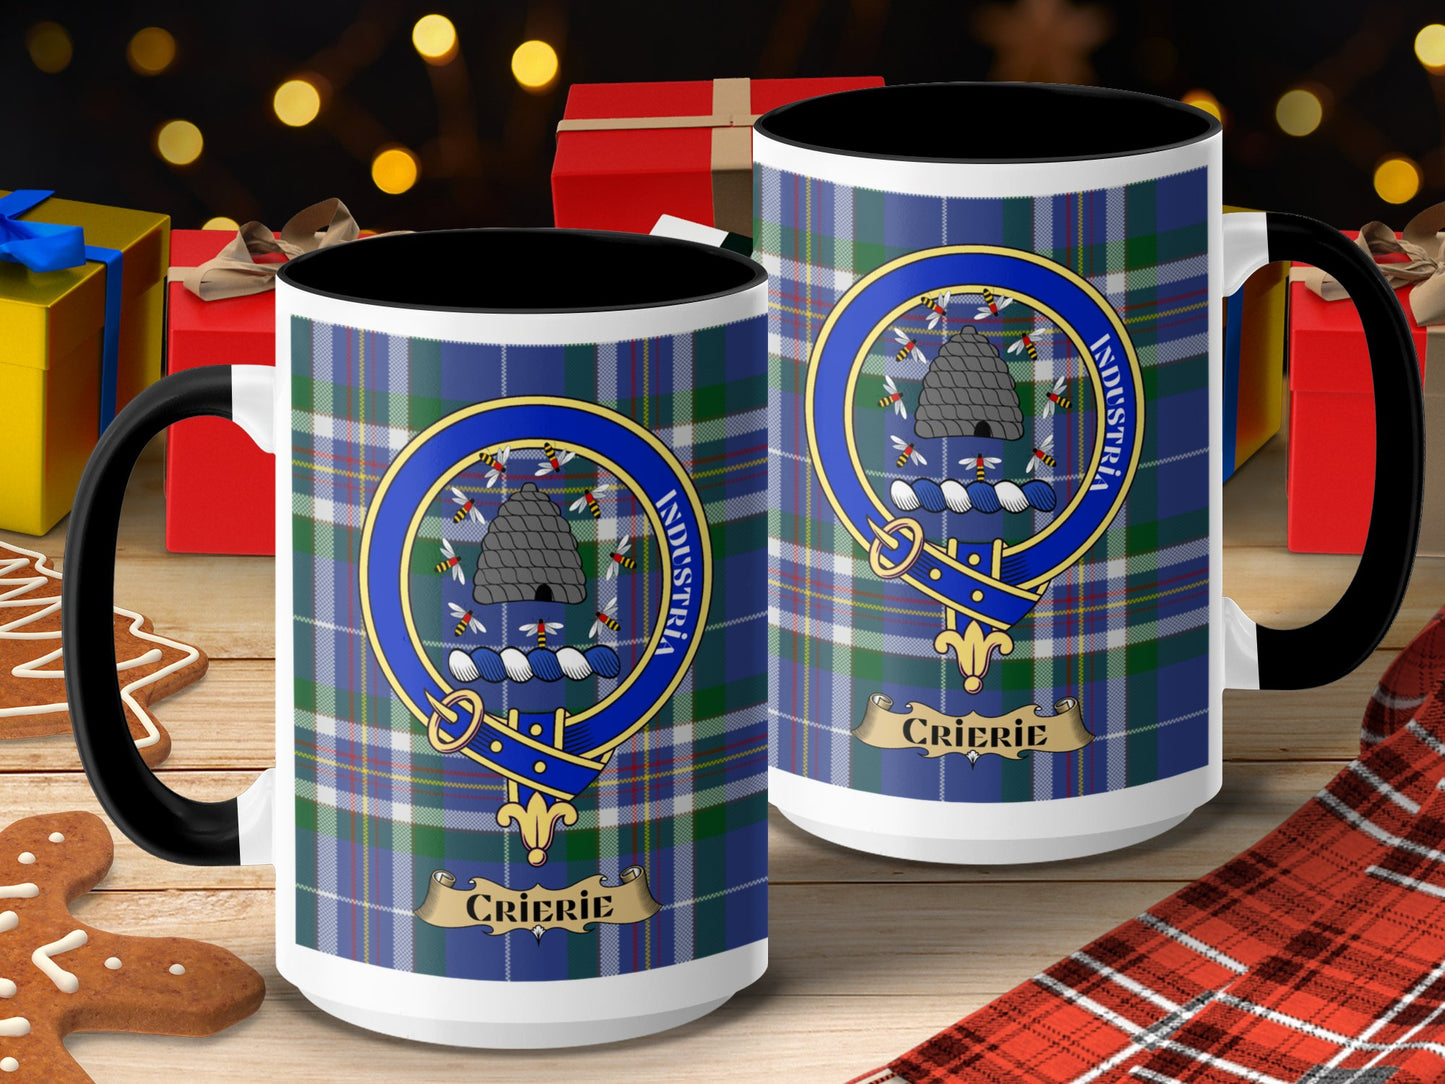 Clan Ferguson Crierie Scottish Tartan Crest Mug - Living Stone Gifts